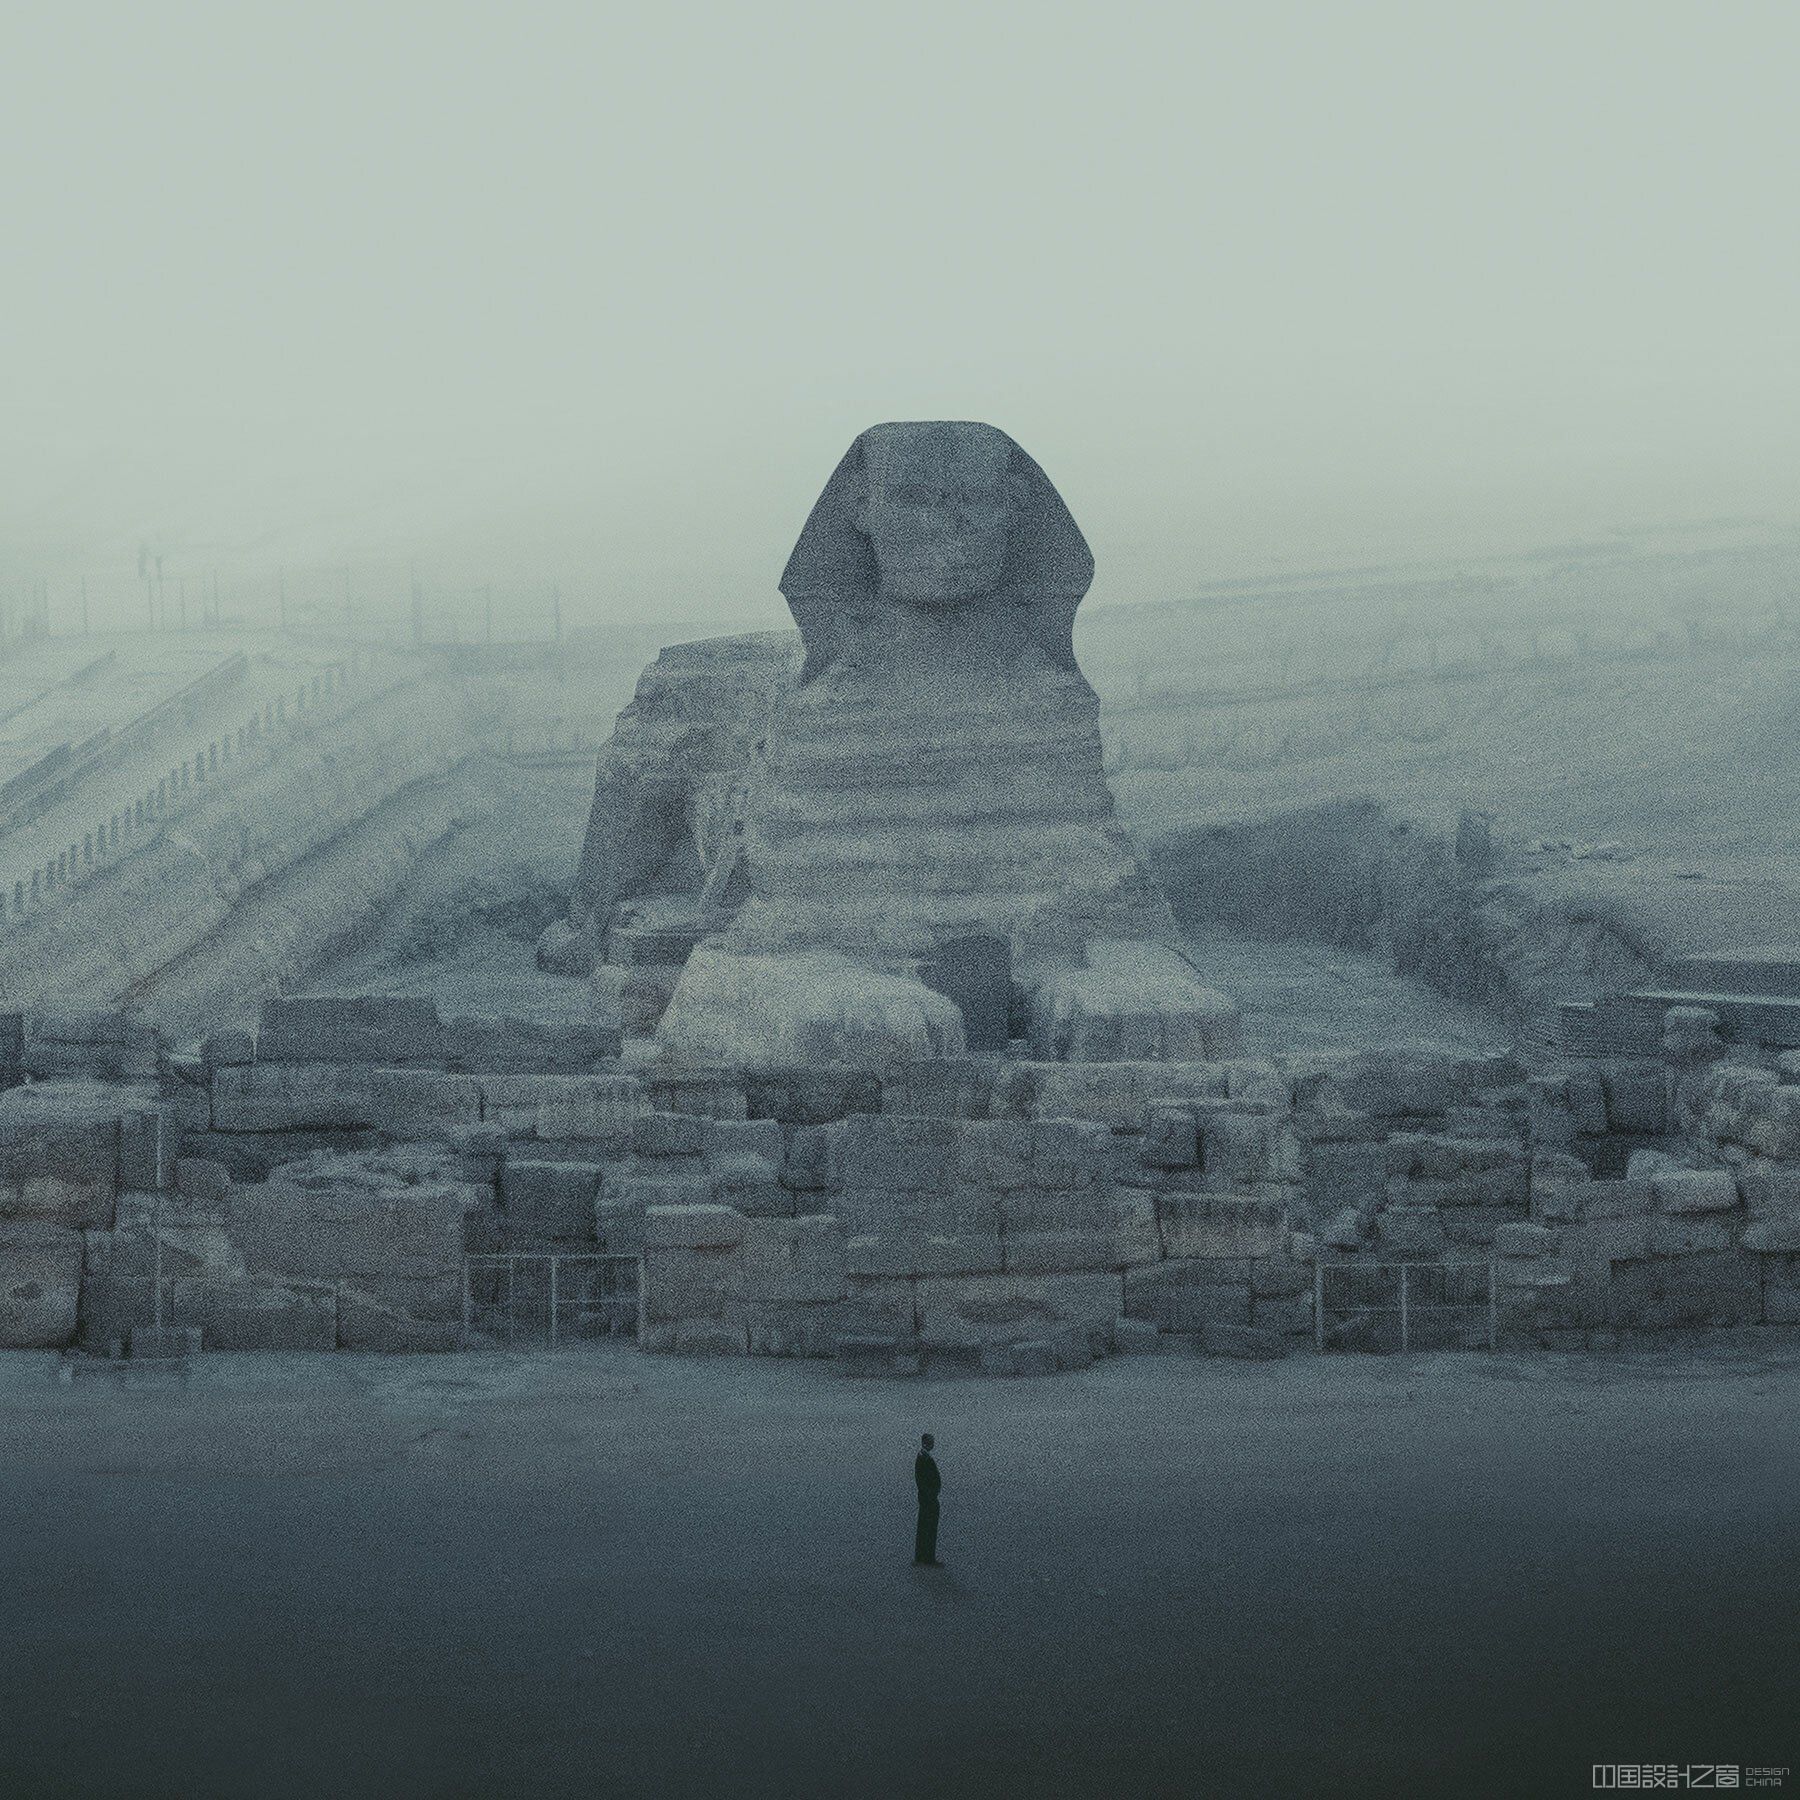 karim-amr-egypt-pyramids-photography-designboom-07a